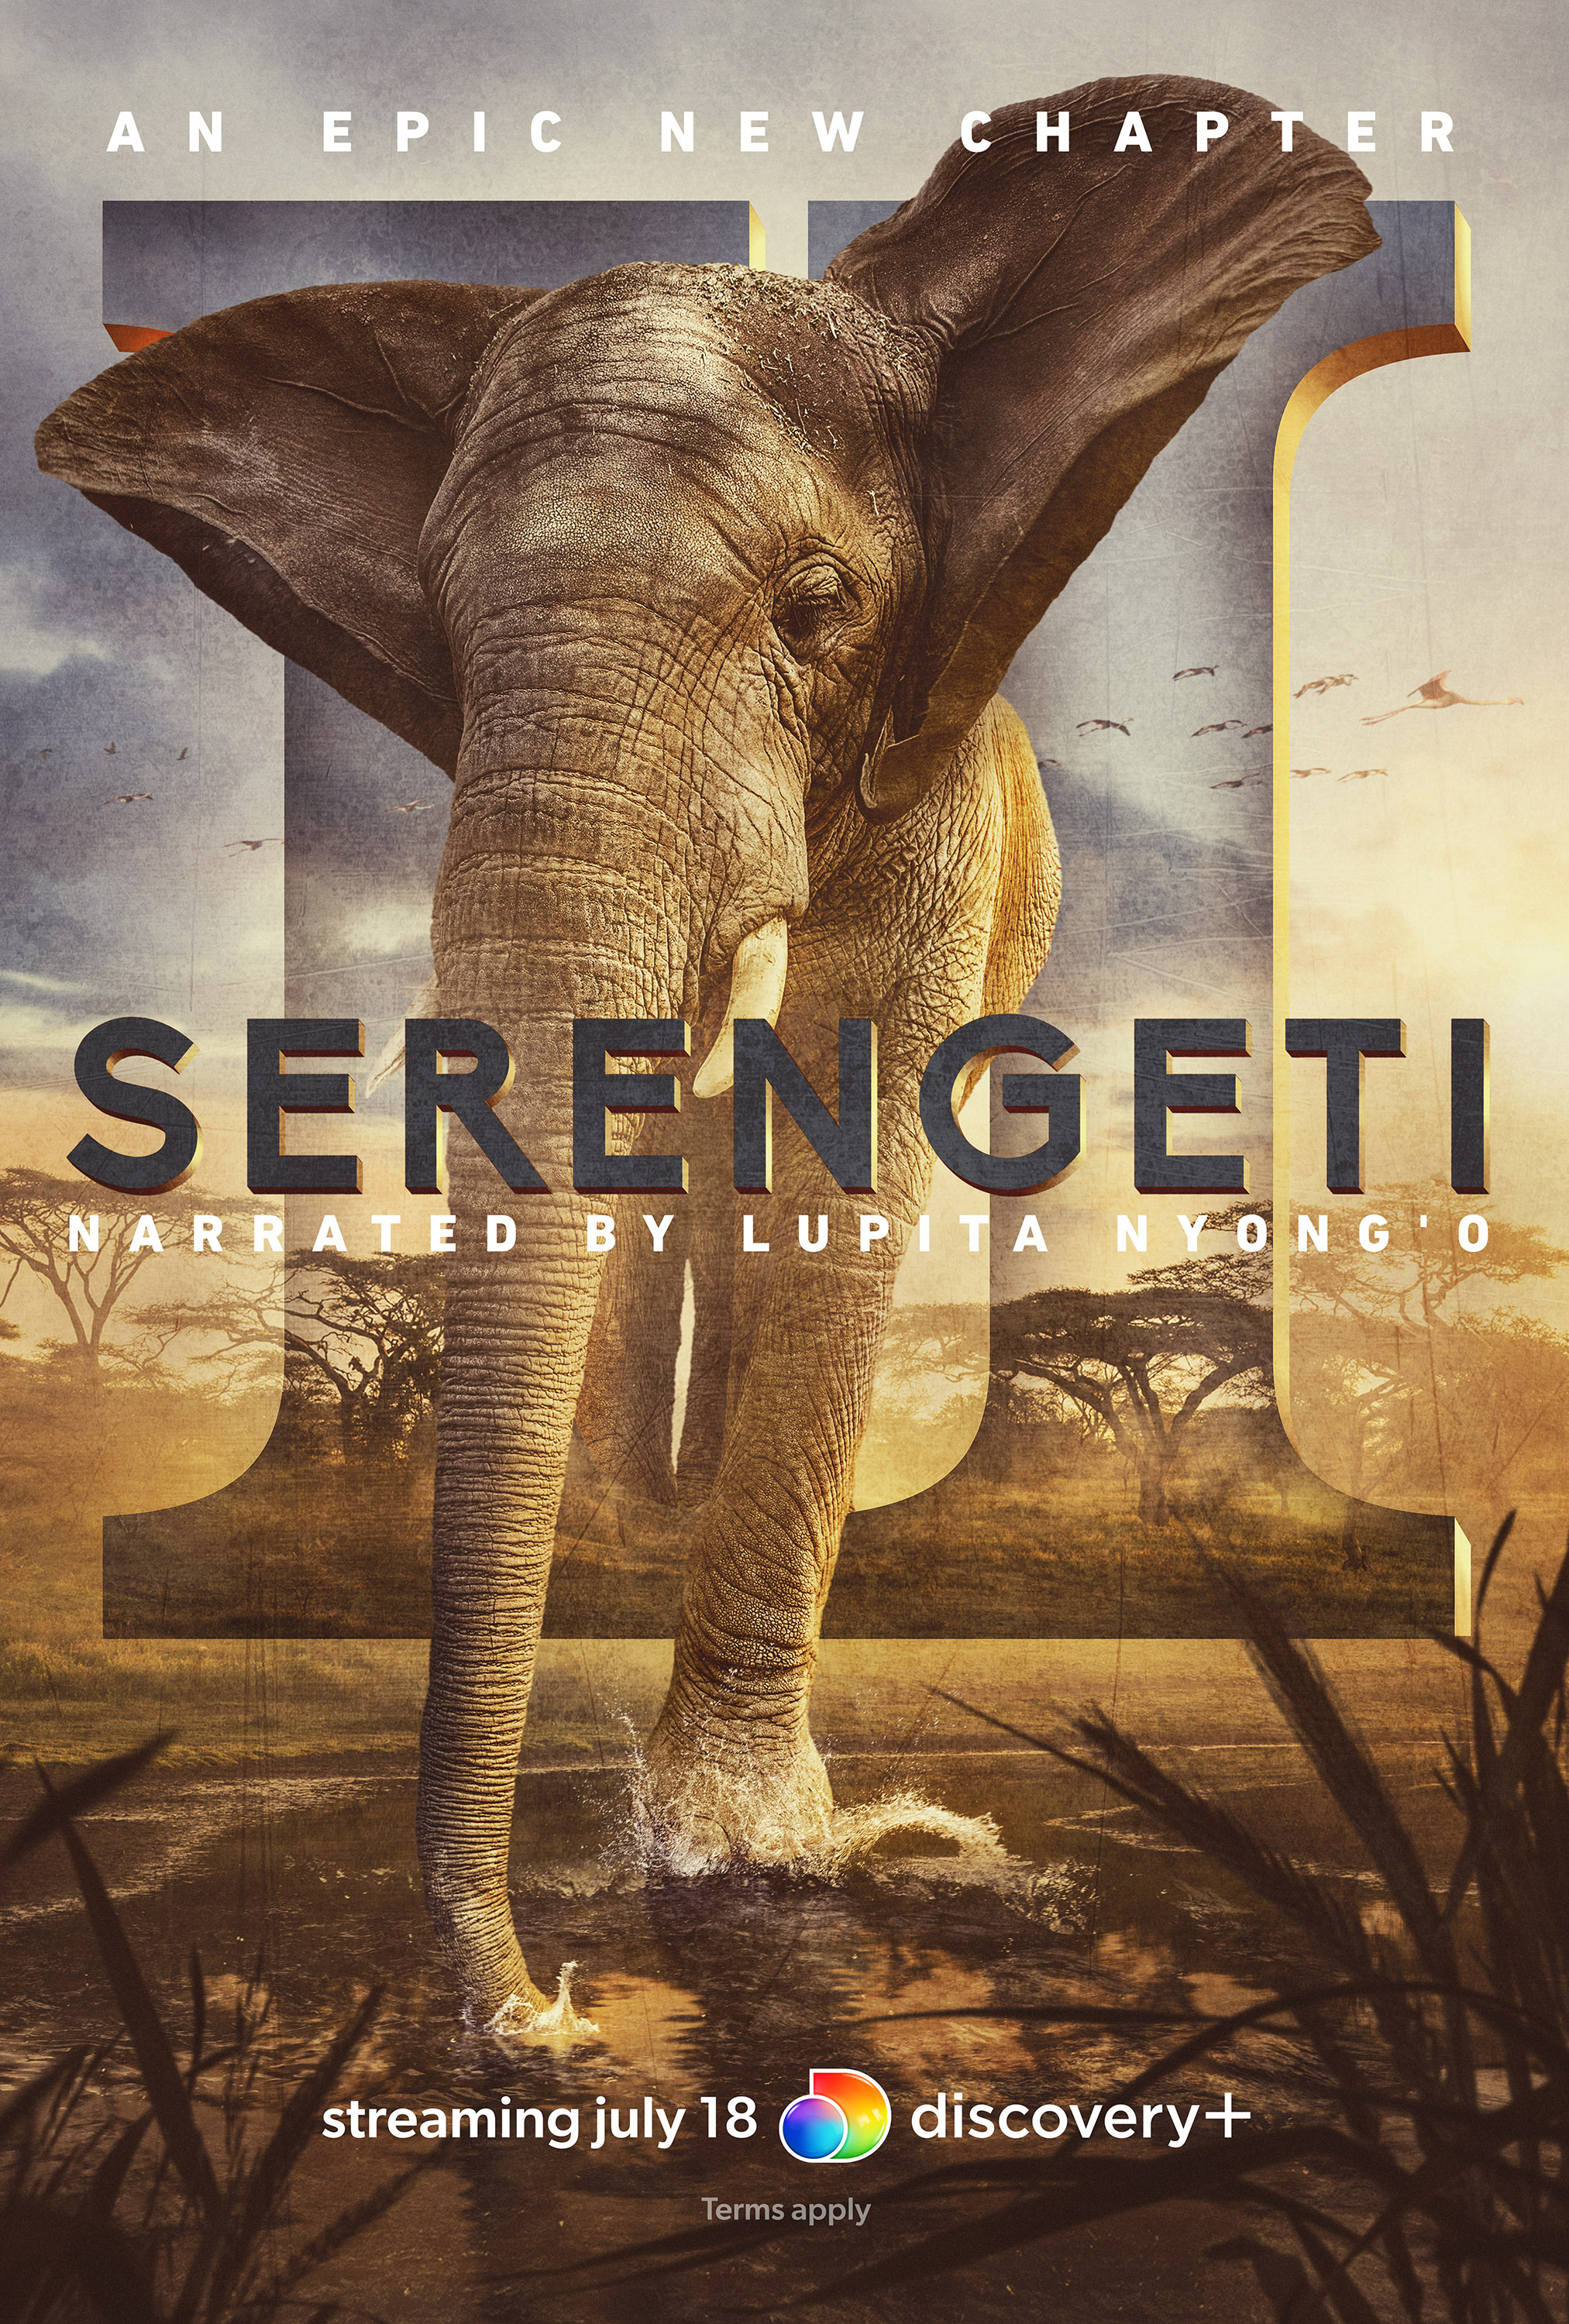 Mega Sized TV Poster Image for Serengeti (#7 of 8)